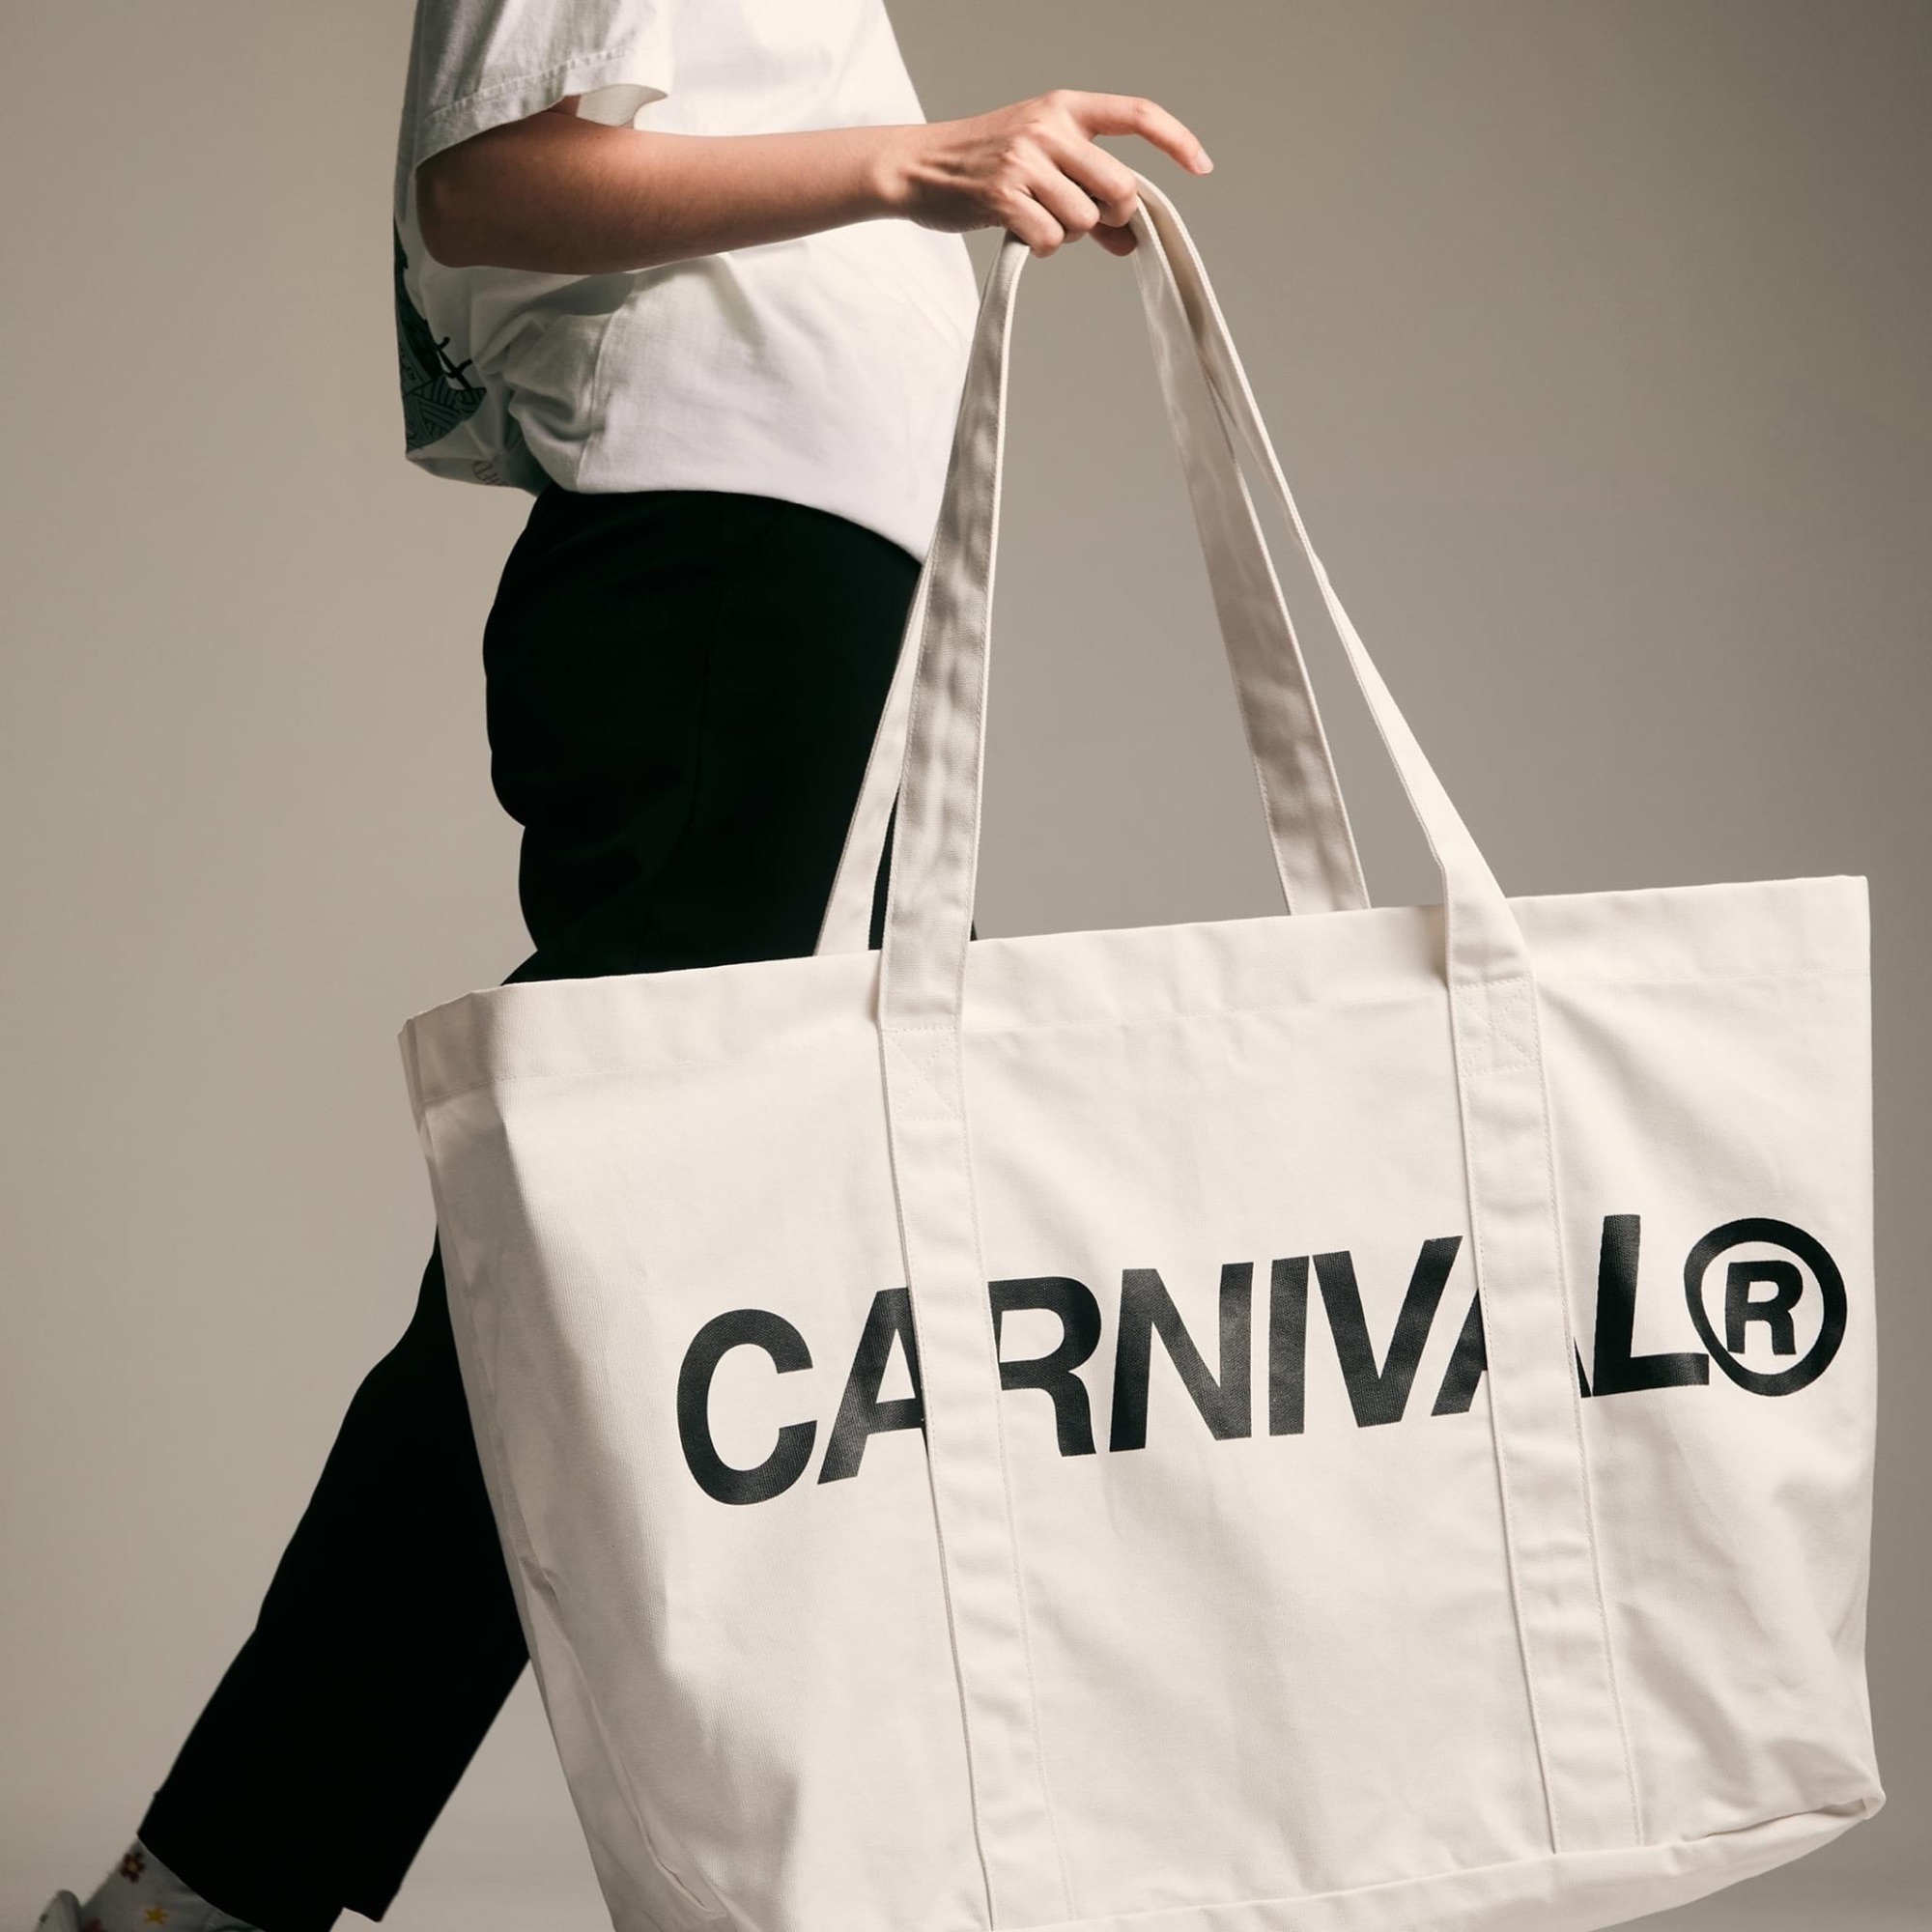 Carnival cross body bag | Crossbody bag, Bags, Clothes design